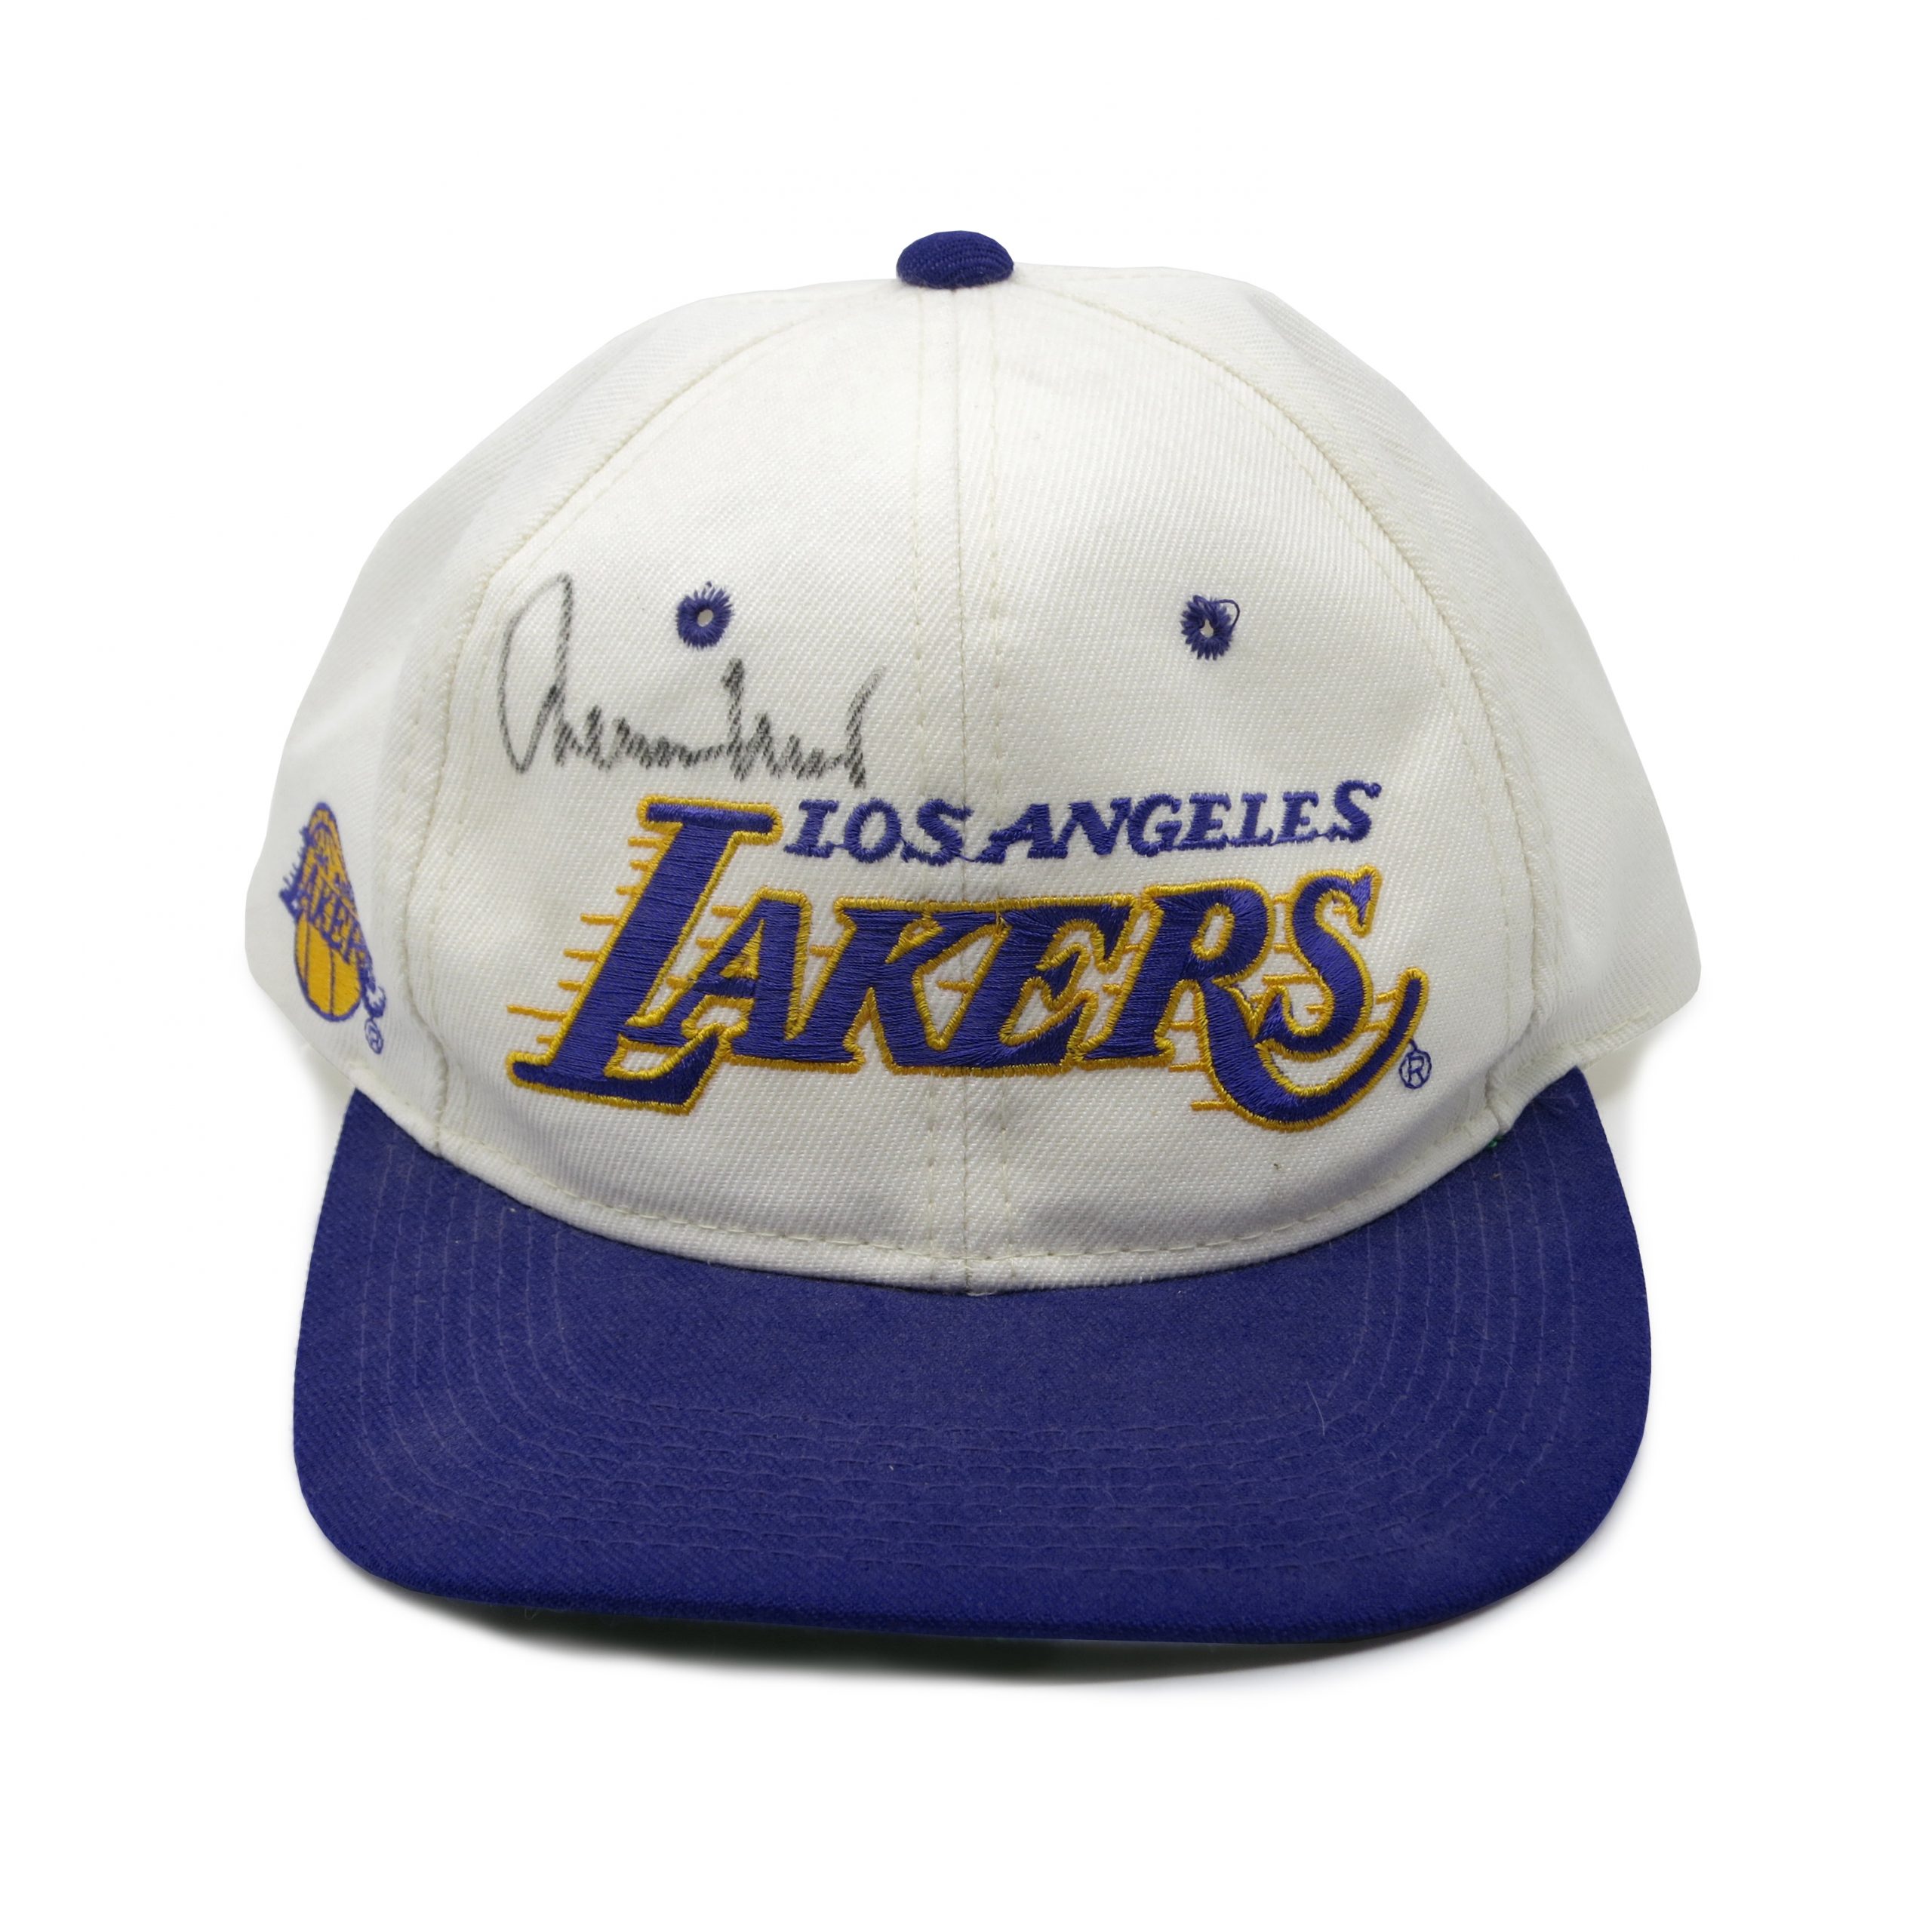 Los Angeles Lakers Sports Specialties Snapback (c. 1990s)